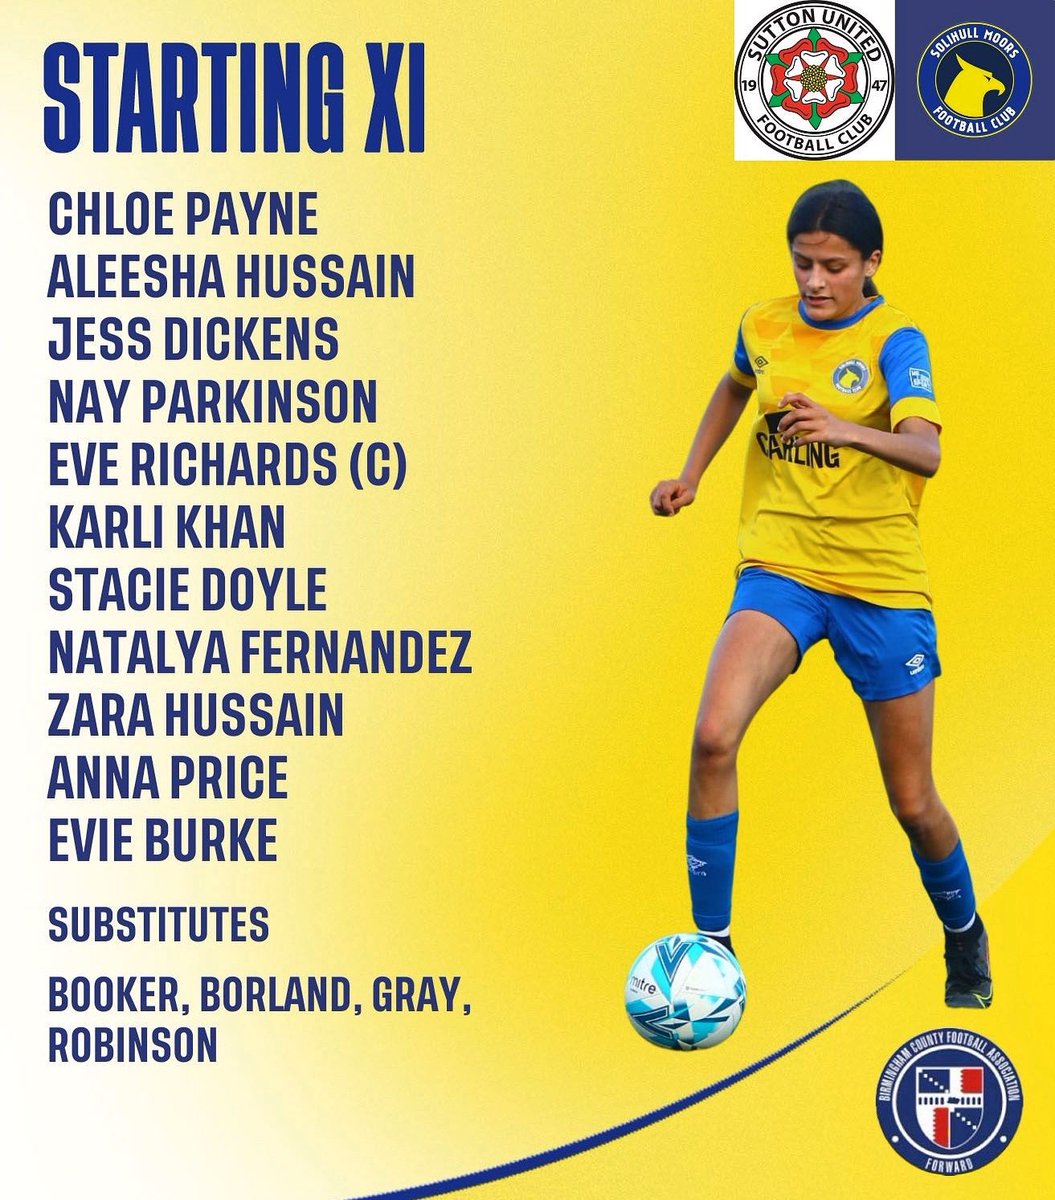 STARTING XI | Our starting lineup as we take on Sutton United Ladies.

#startingxi #smwfc #ladiesfootball #womensfootball #hergametoo #solihullmoors